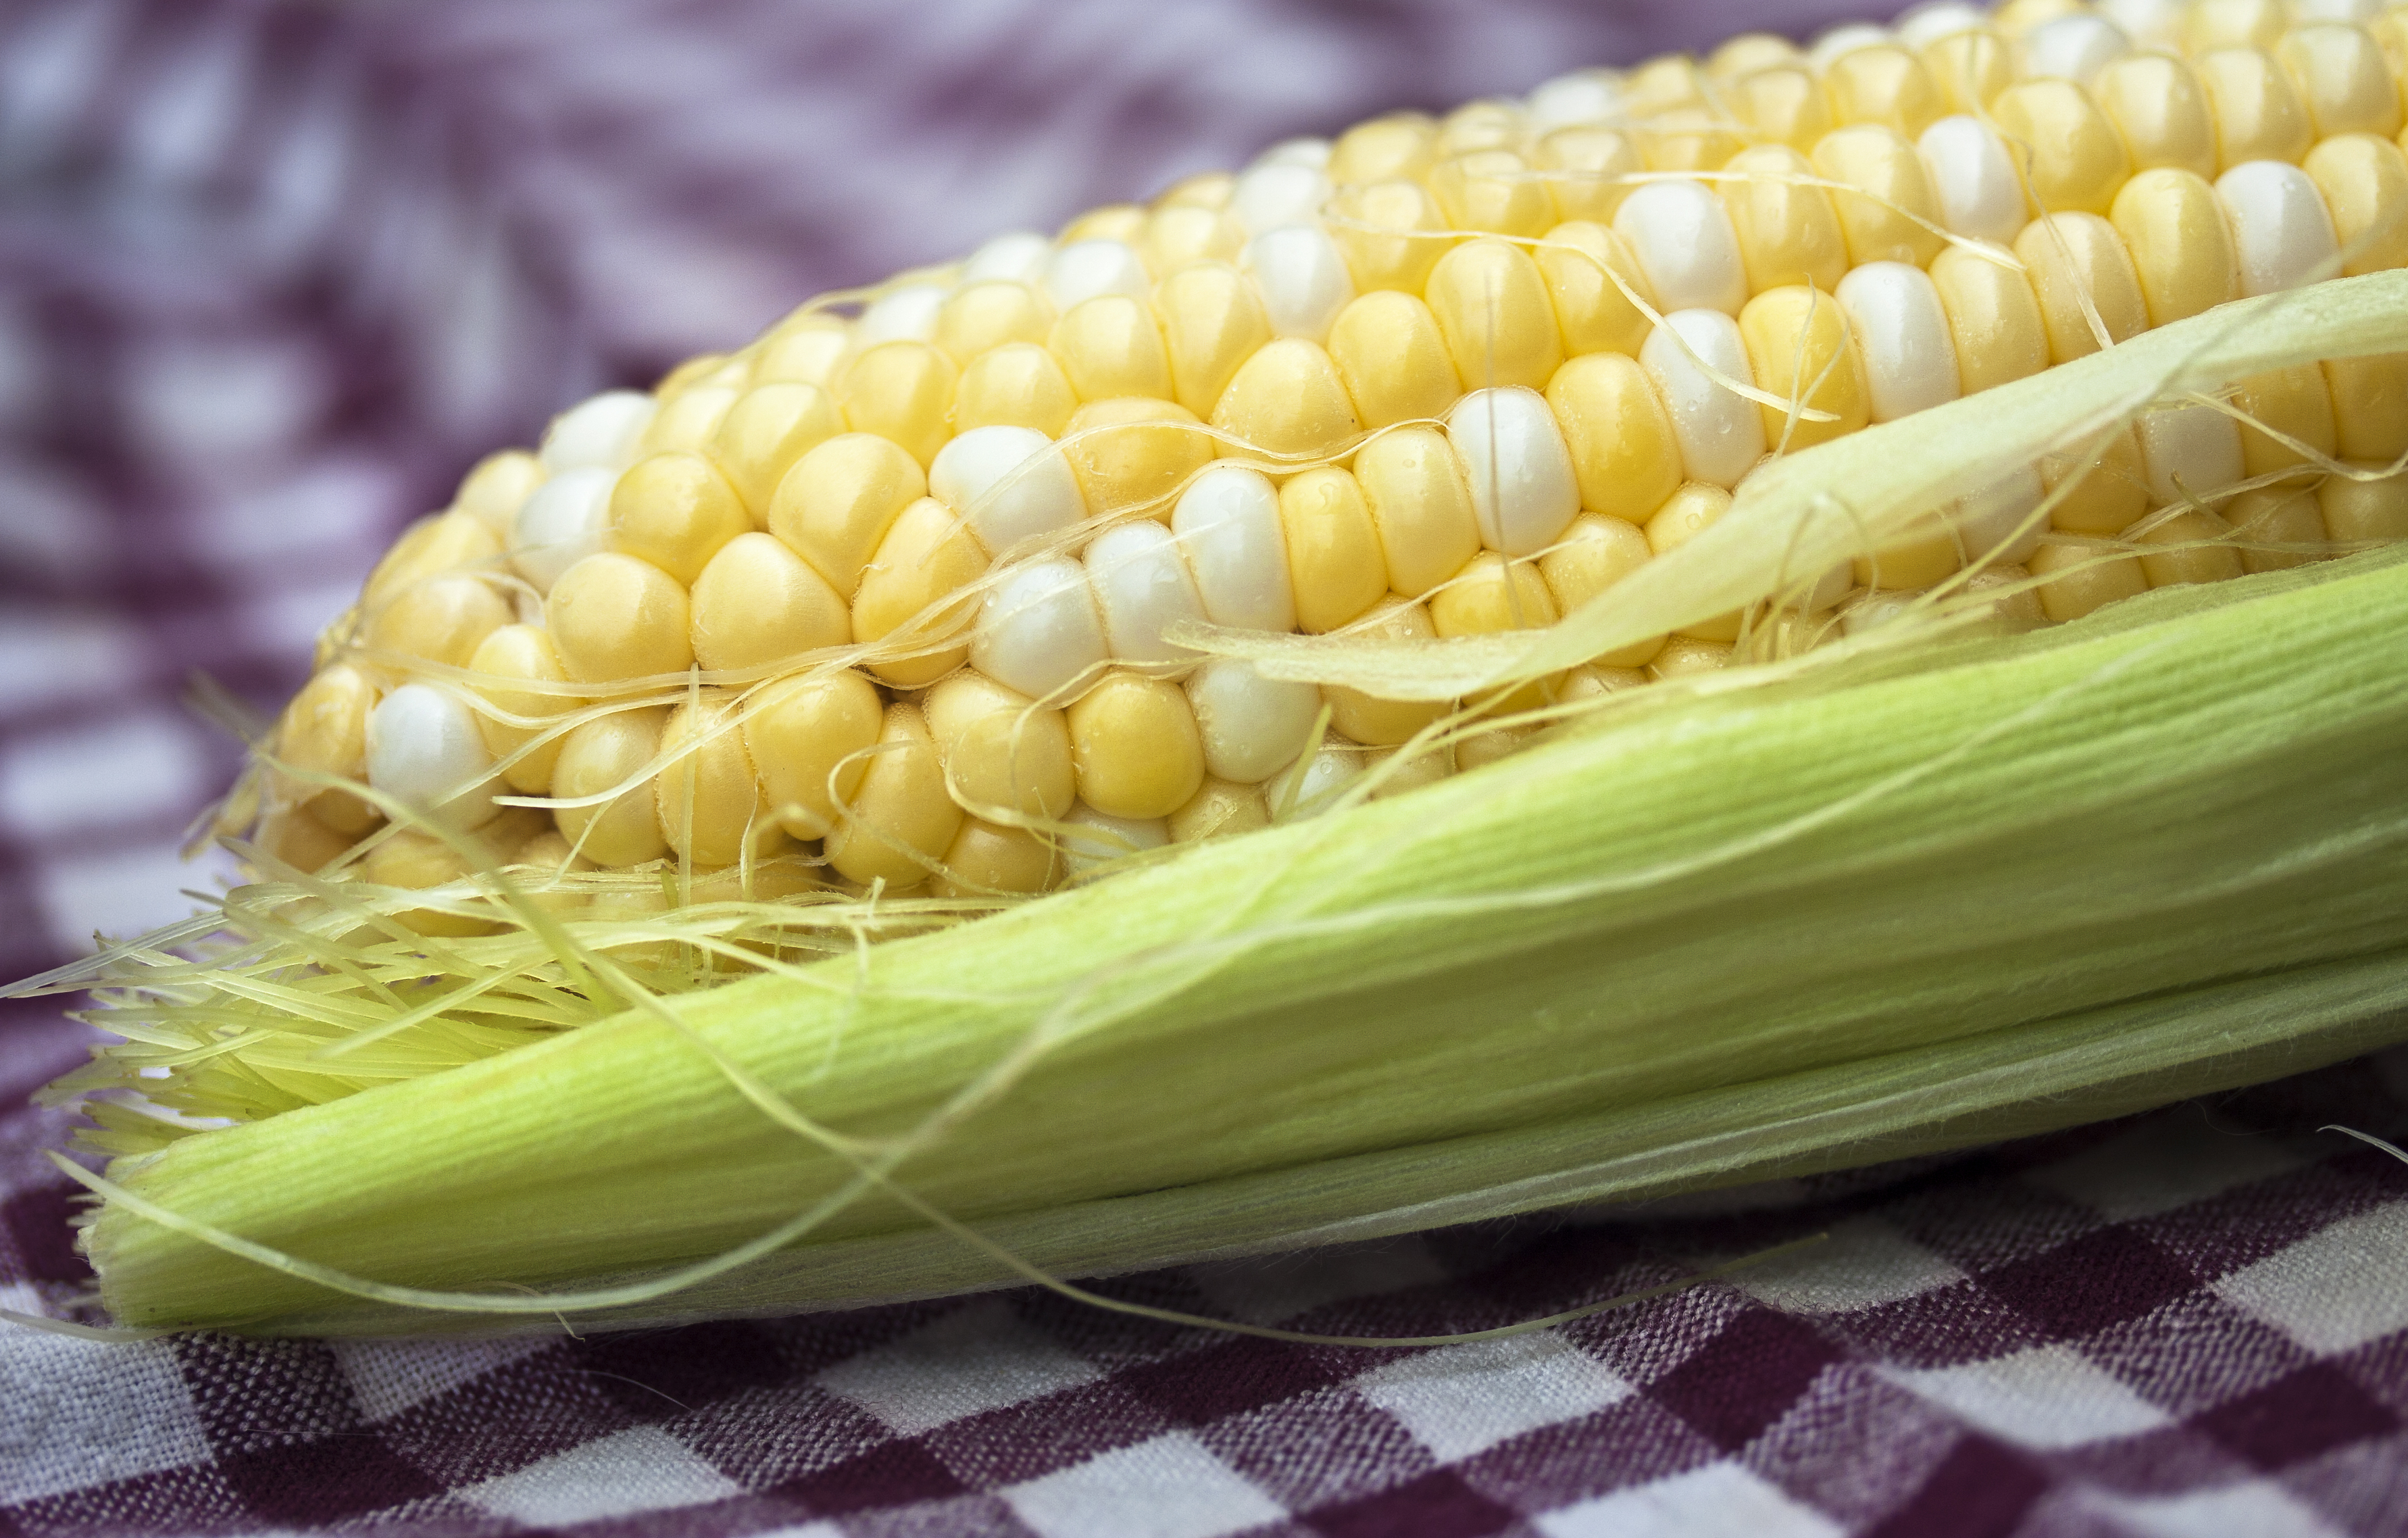 Corn note. Кукуруза Камберленд. Кукуруза "Камберлэнд" f1. Кукуруза биколор. Кукуруза сорта «Камберленд»,.